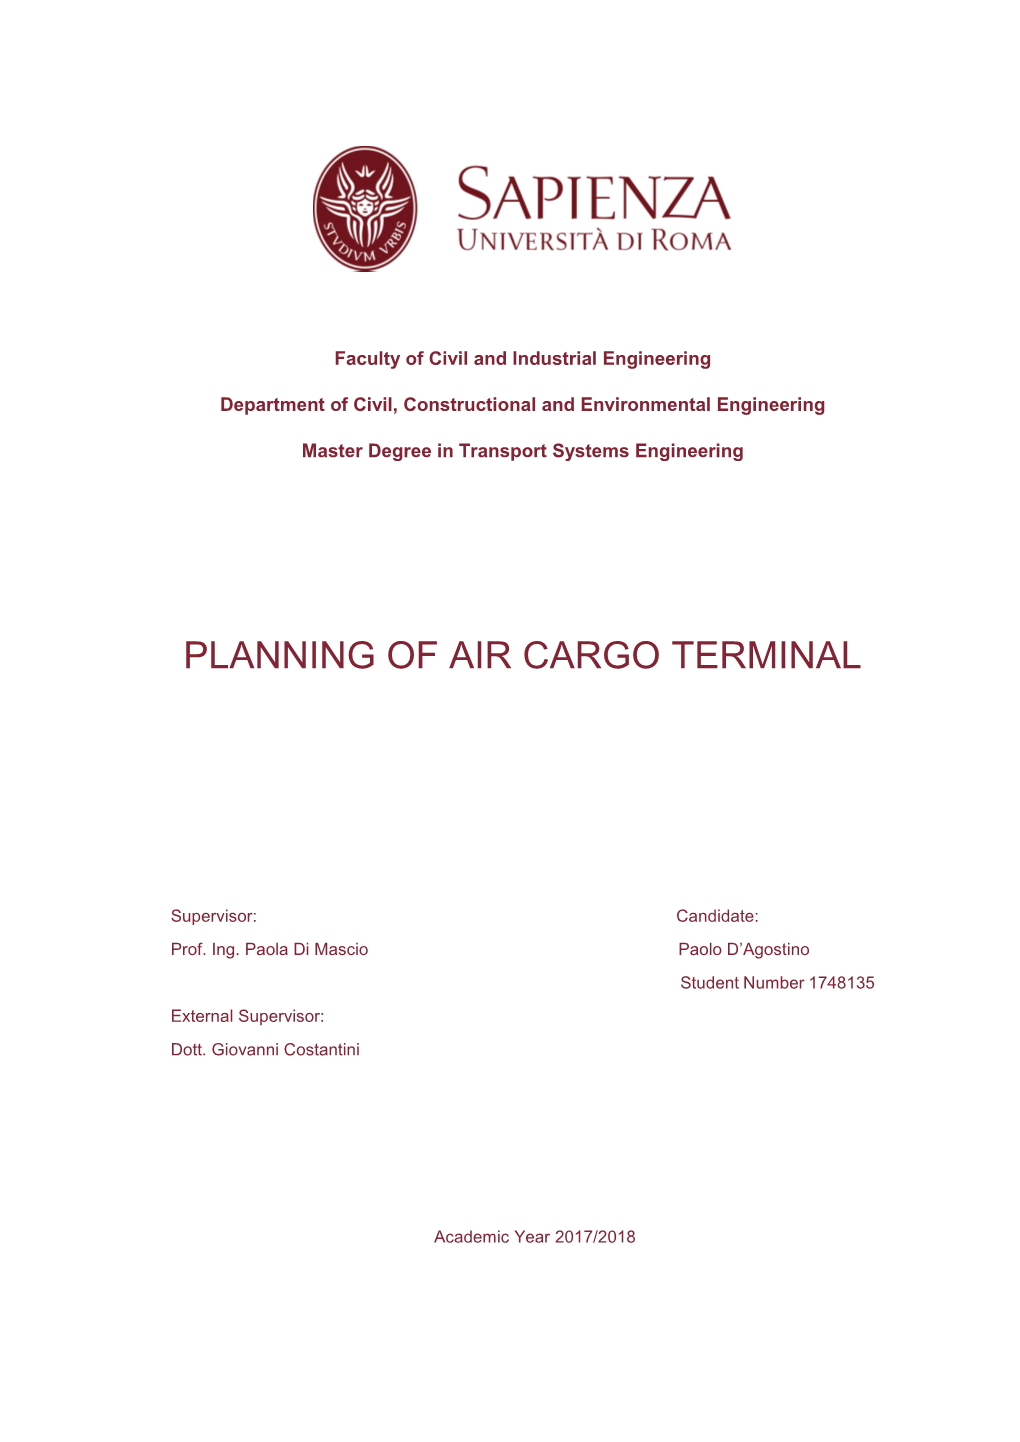 Planning of Air Cargo Terminal